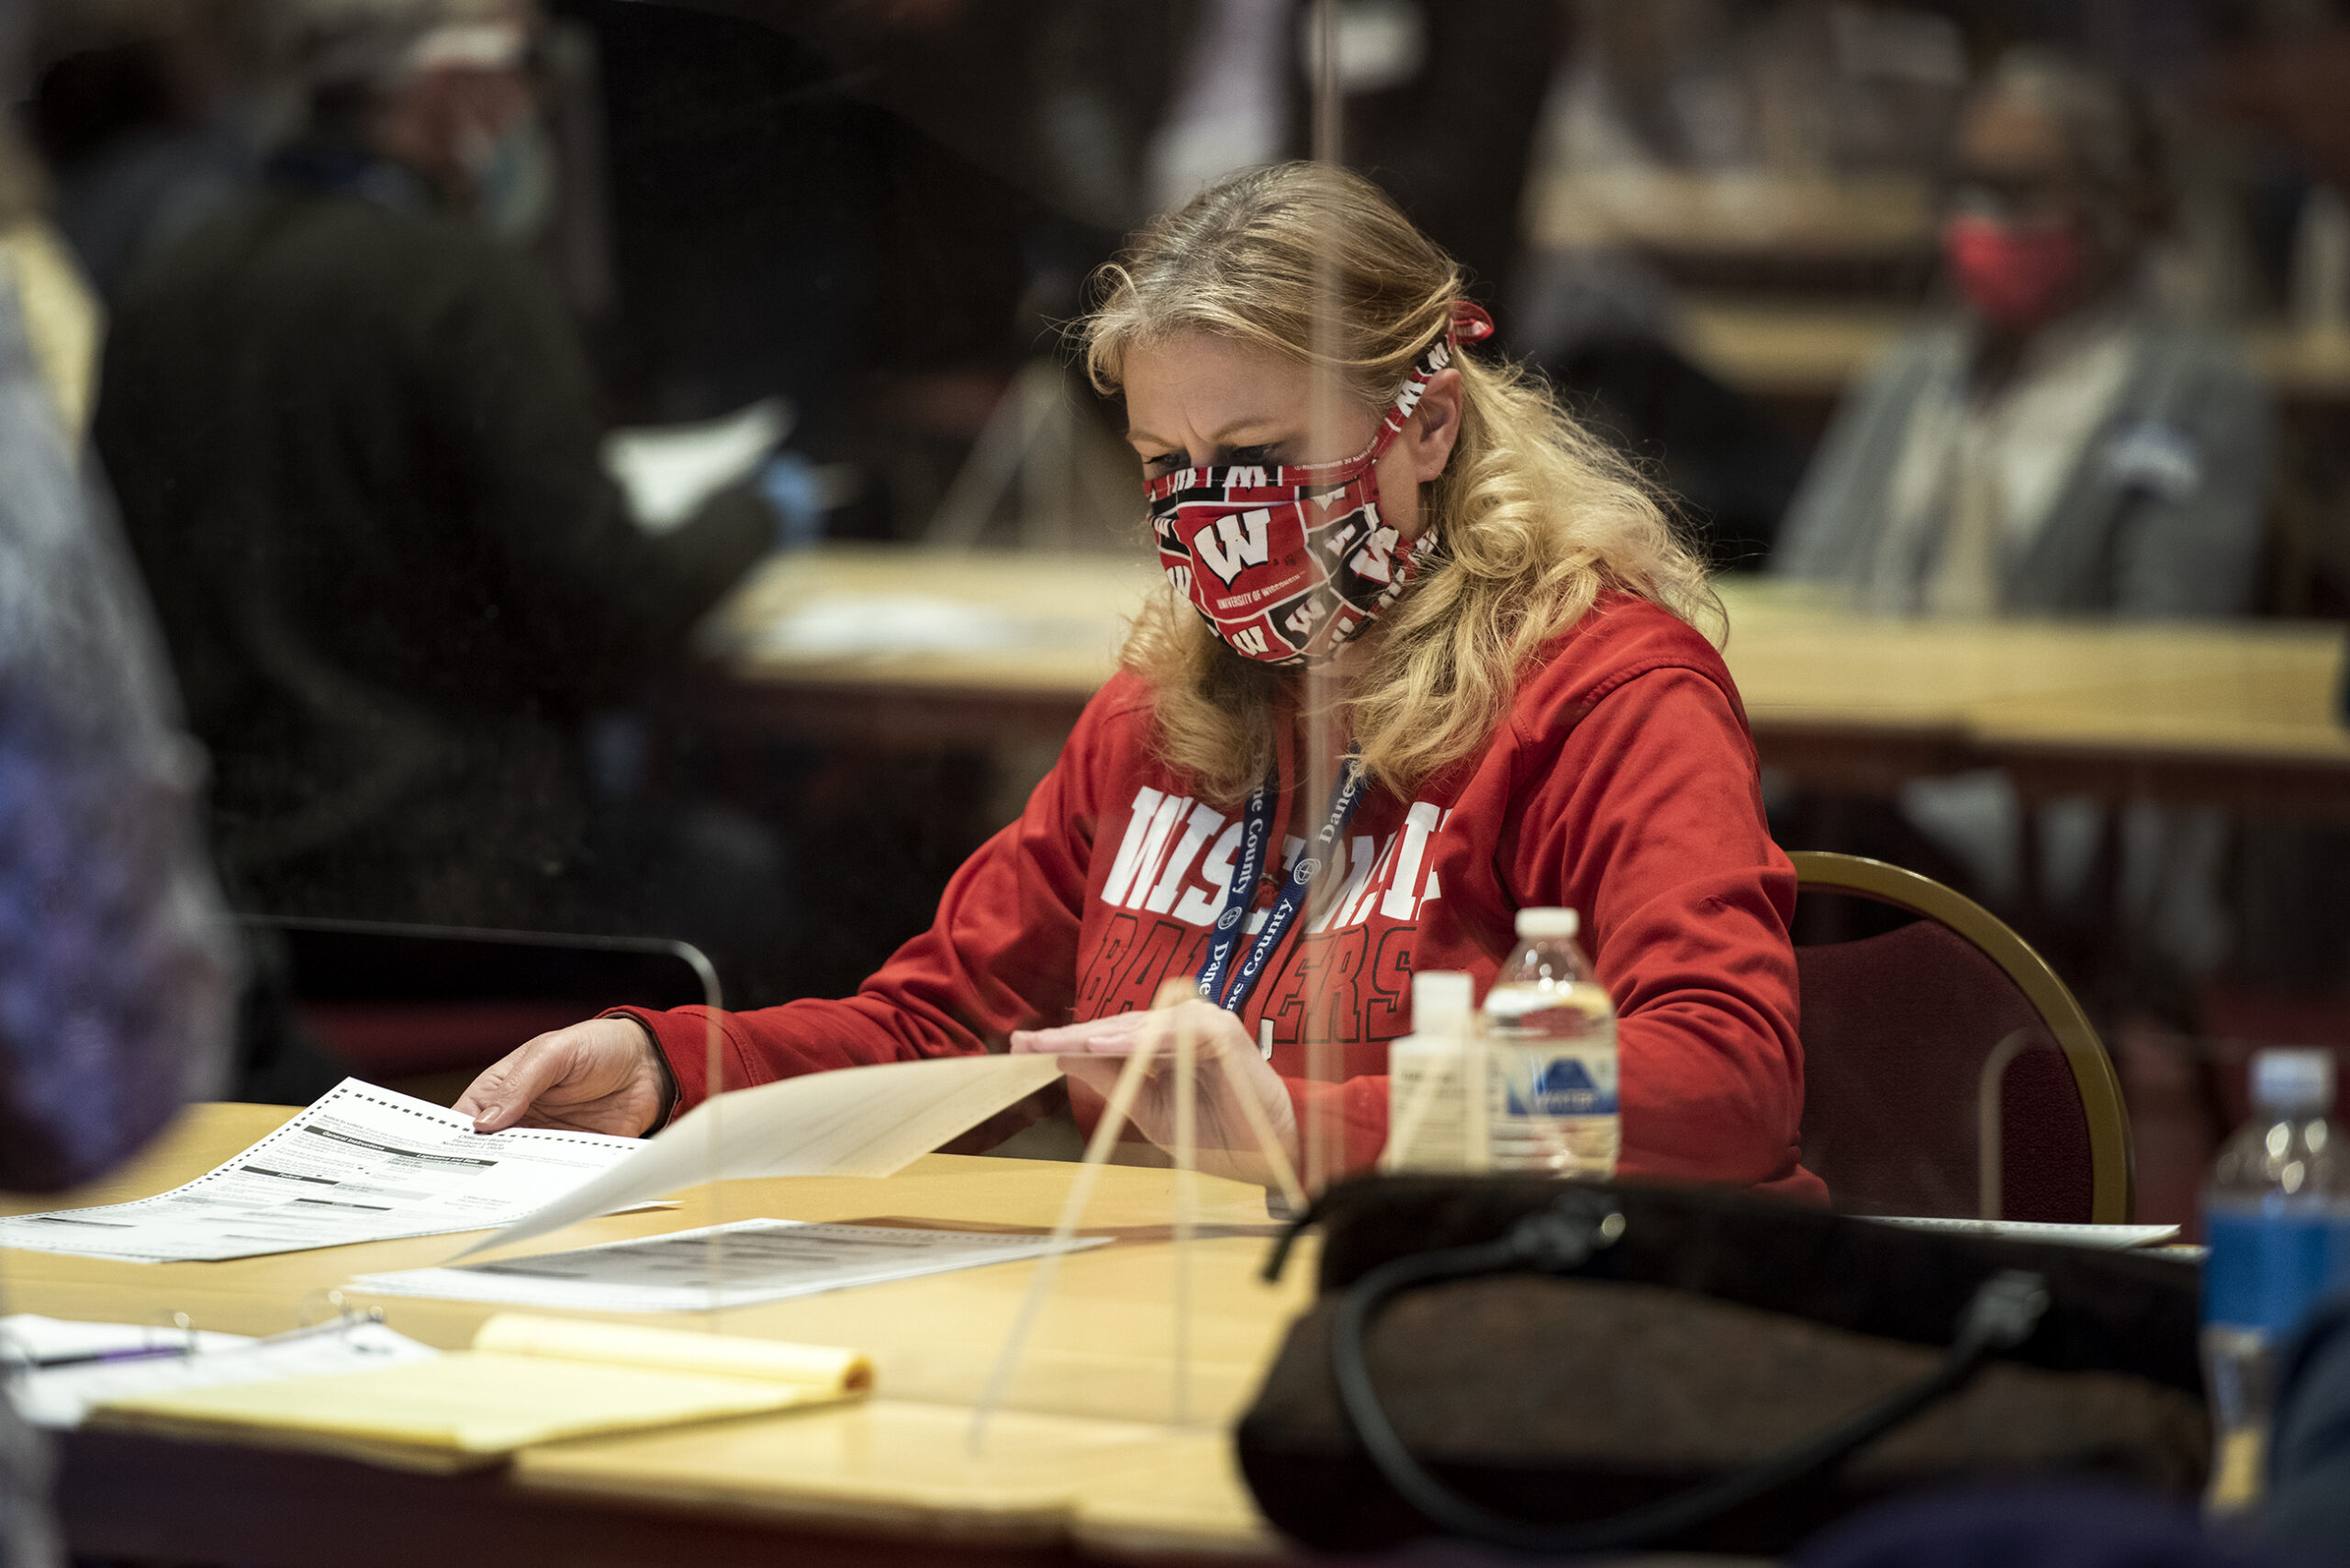 A woman sits behind plexiglass and flips through ballots